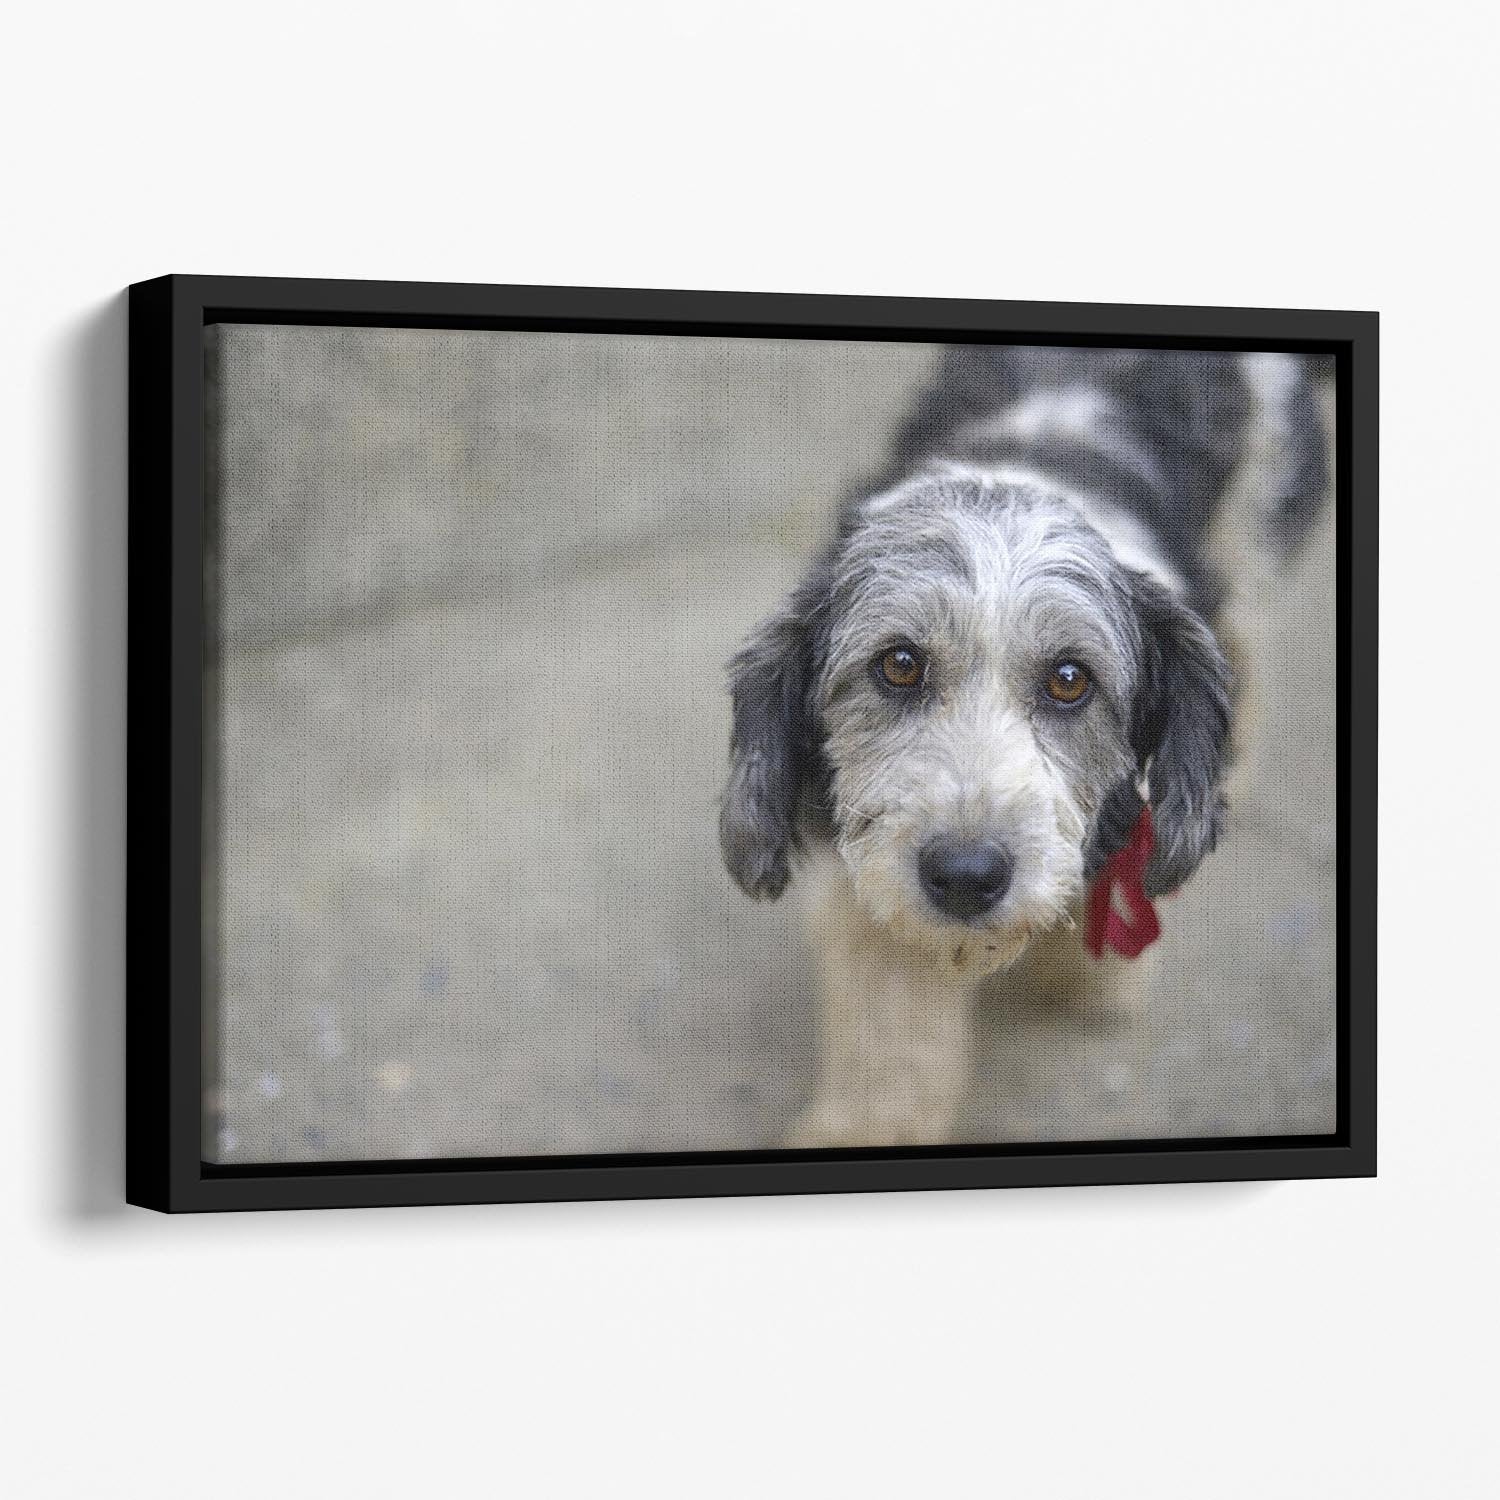 Sad look of a cute stray dog Floating Framed Canvas - Canvas Art Rocks - 1